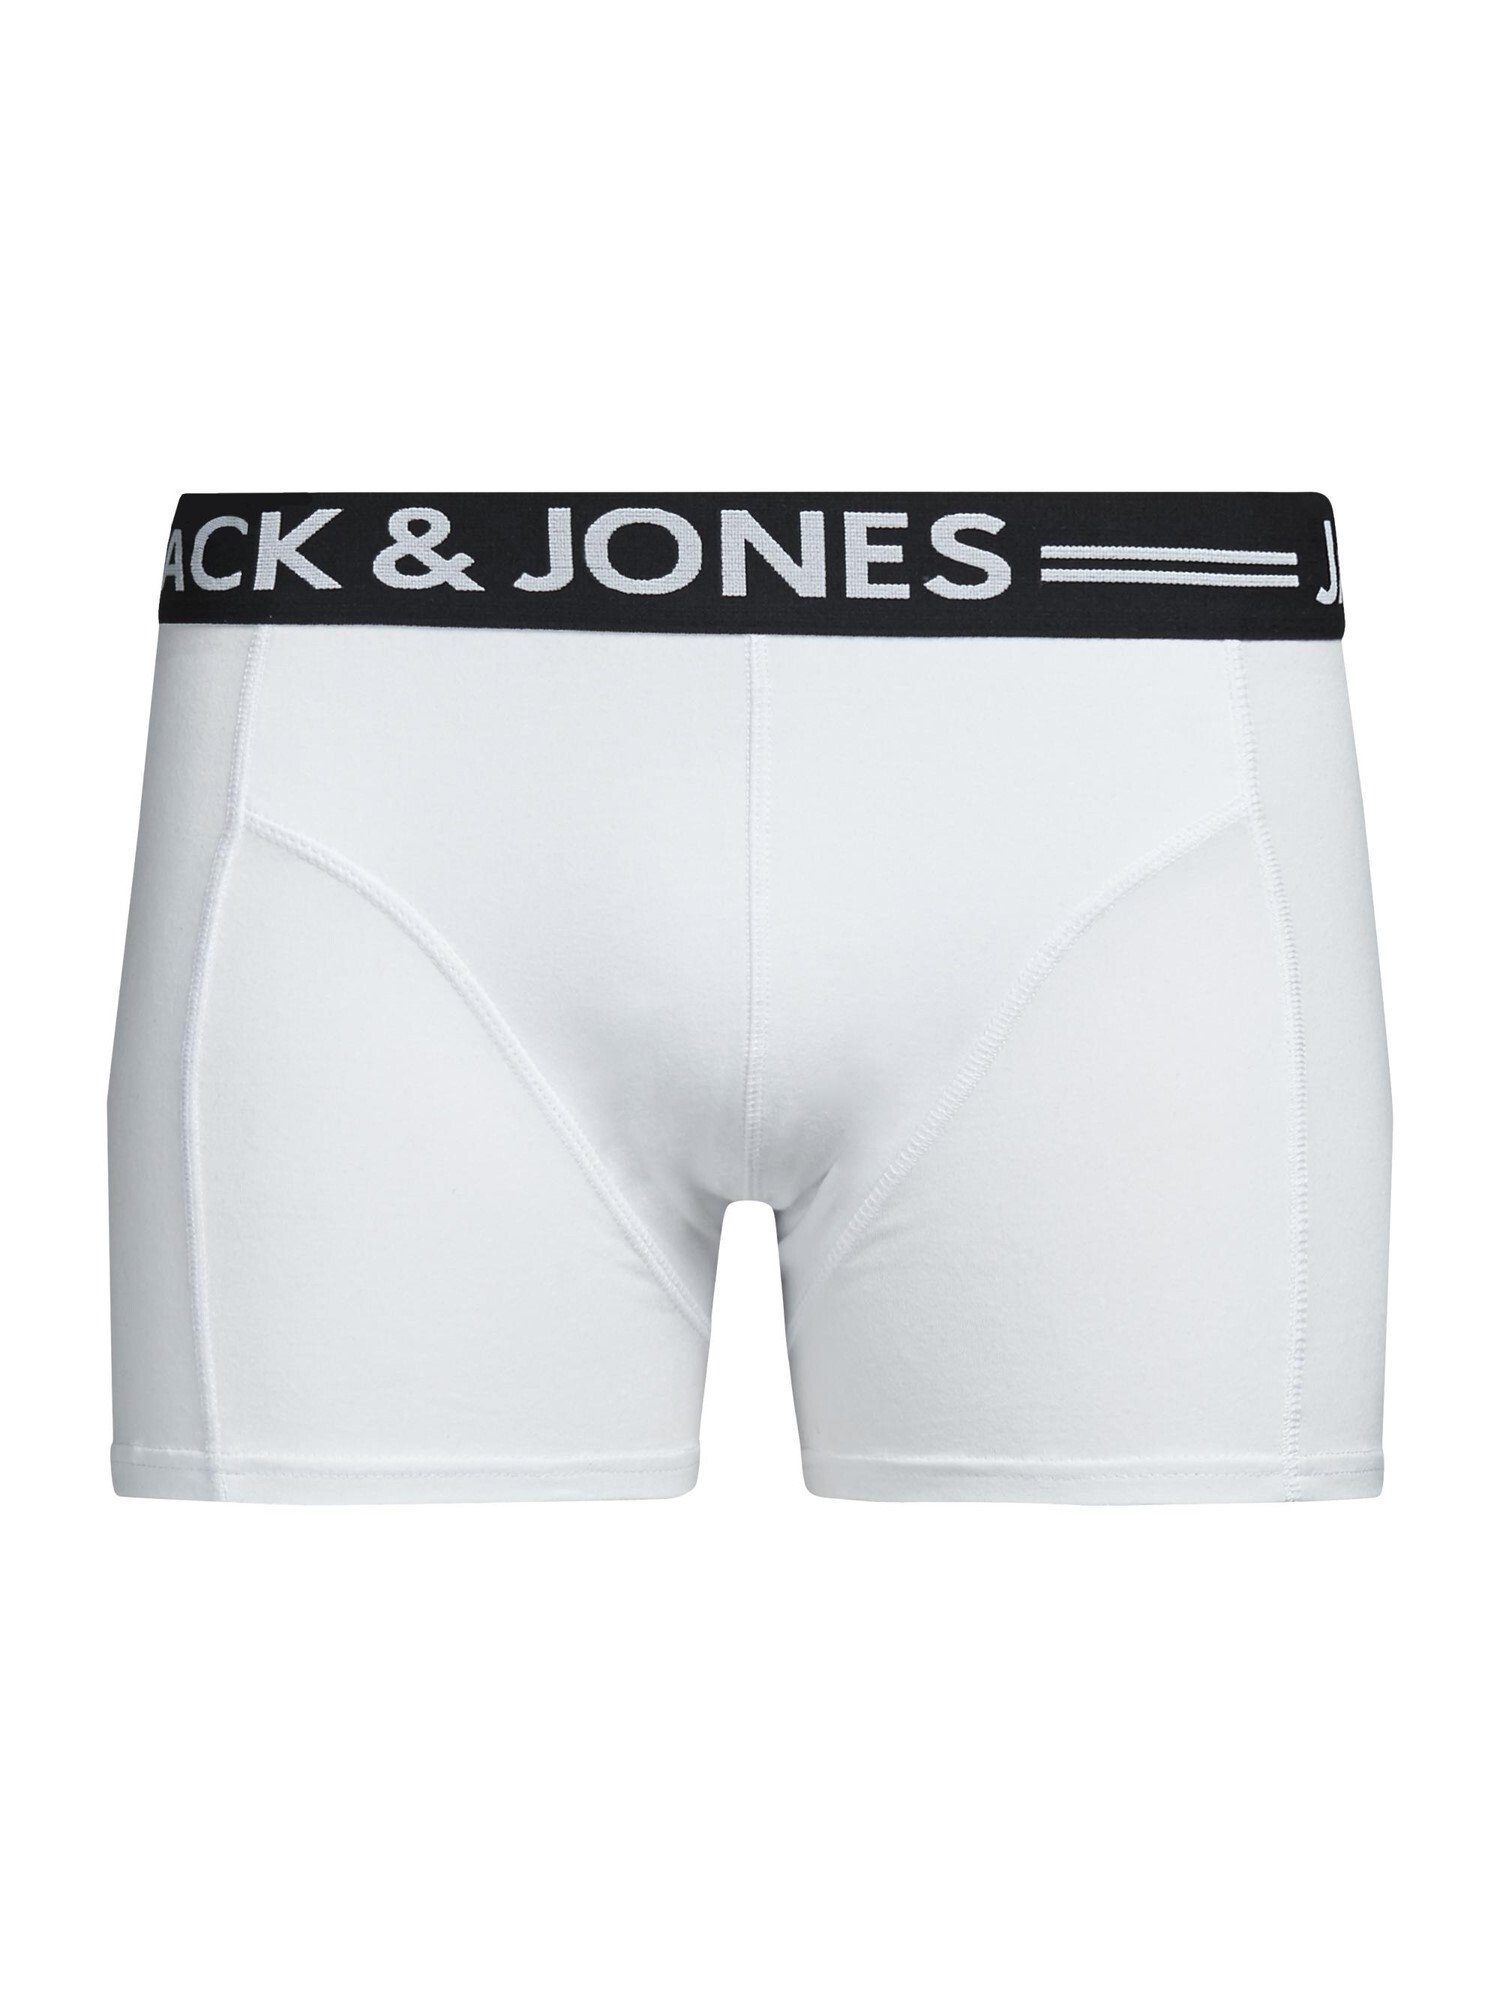 Jack & Jones Boxershorts Trunks weiß Unterhose Sense